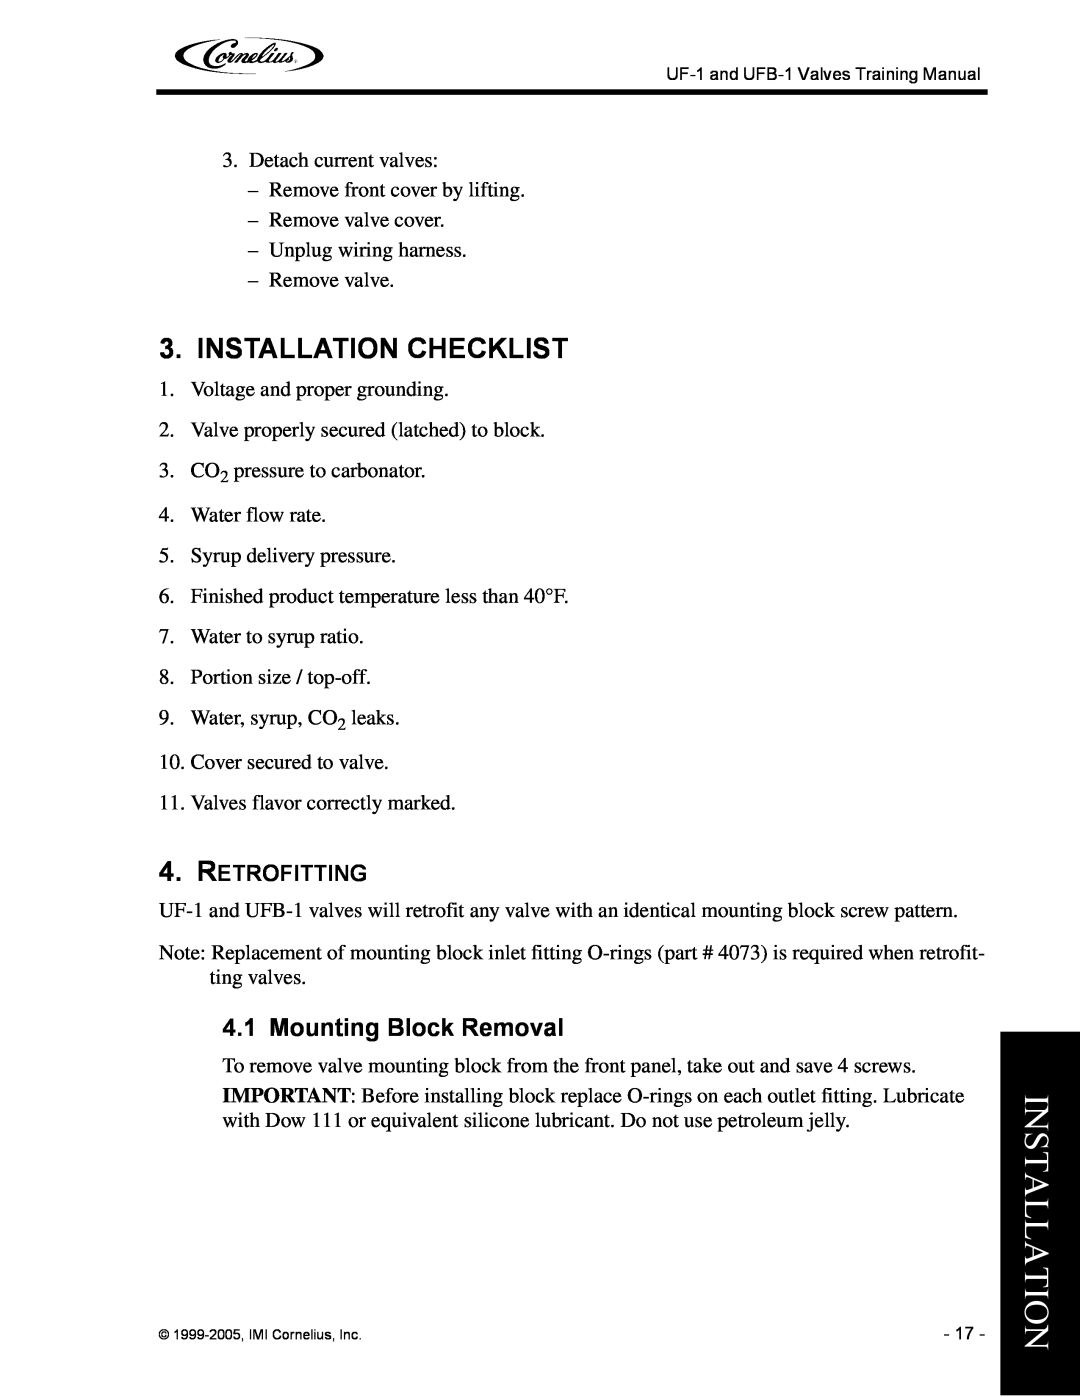 Cornelius UF-1, UFB-1 manual Installation Checklist, Mounting Block Removal, Retrofitting 